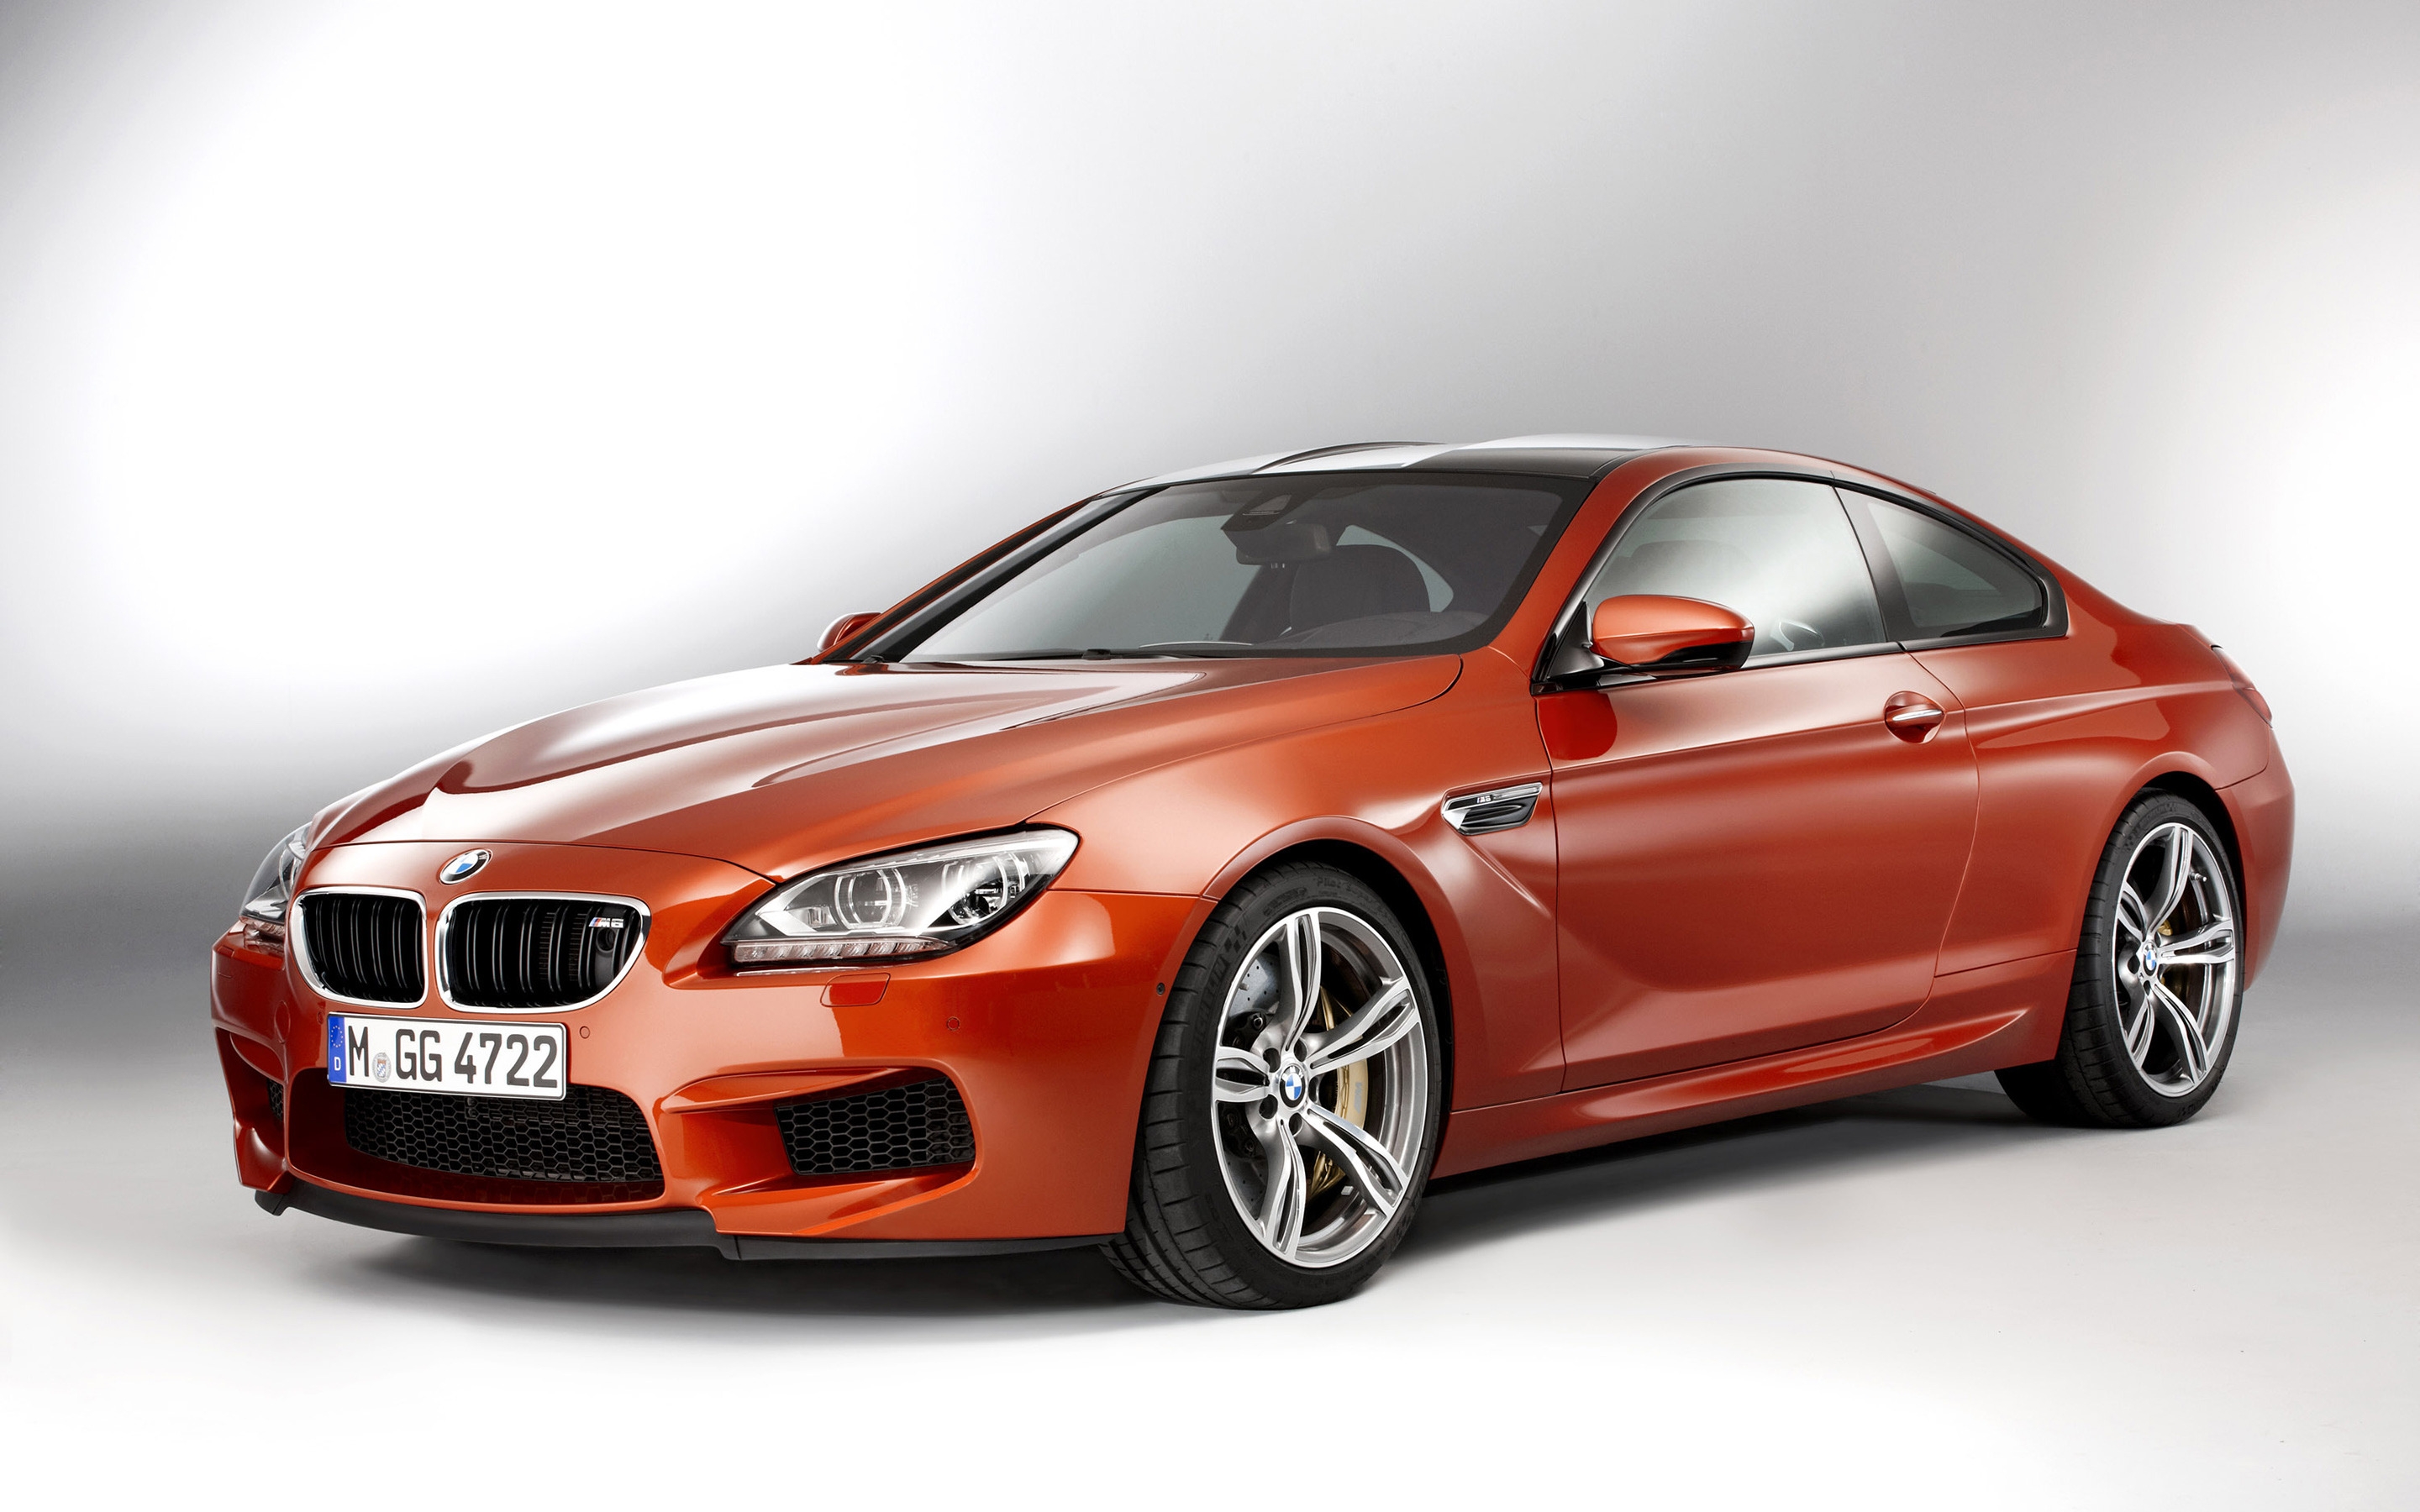 2013 BMW M6 Coupe Studio for 2880 x 1800 Retina Display resolution